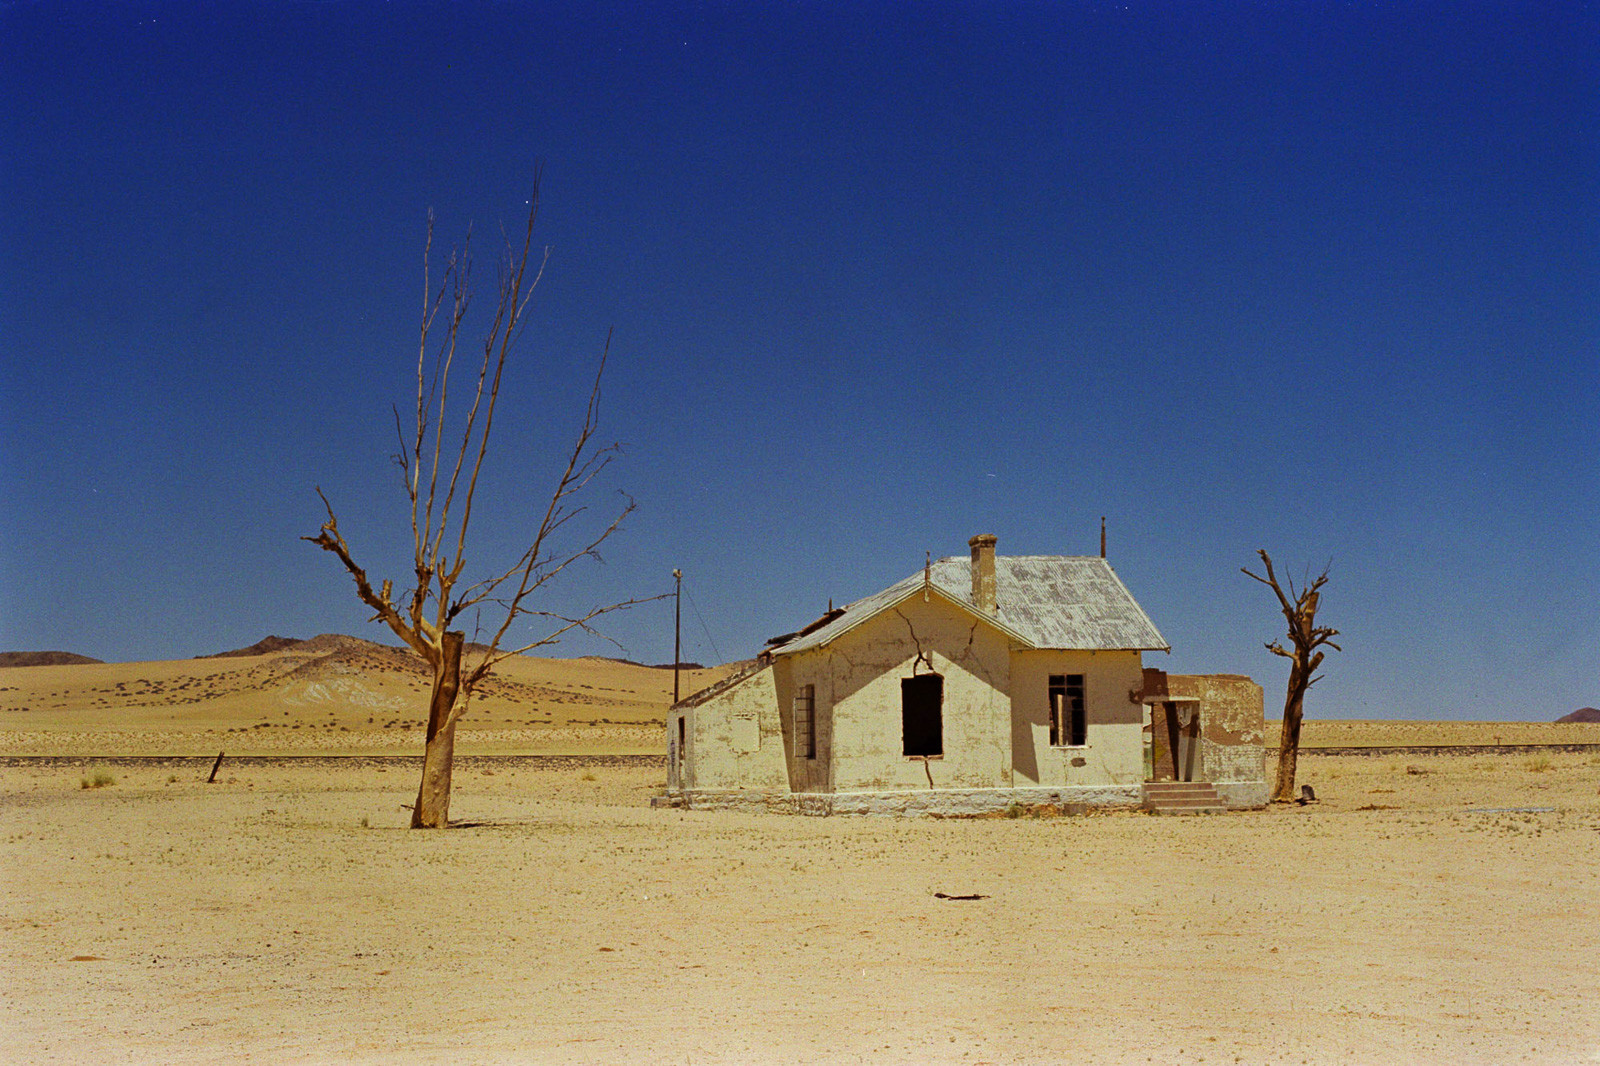 namibia abandoned train station in the desert